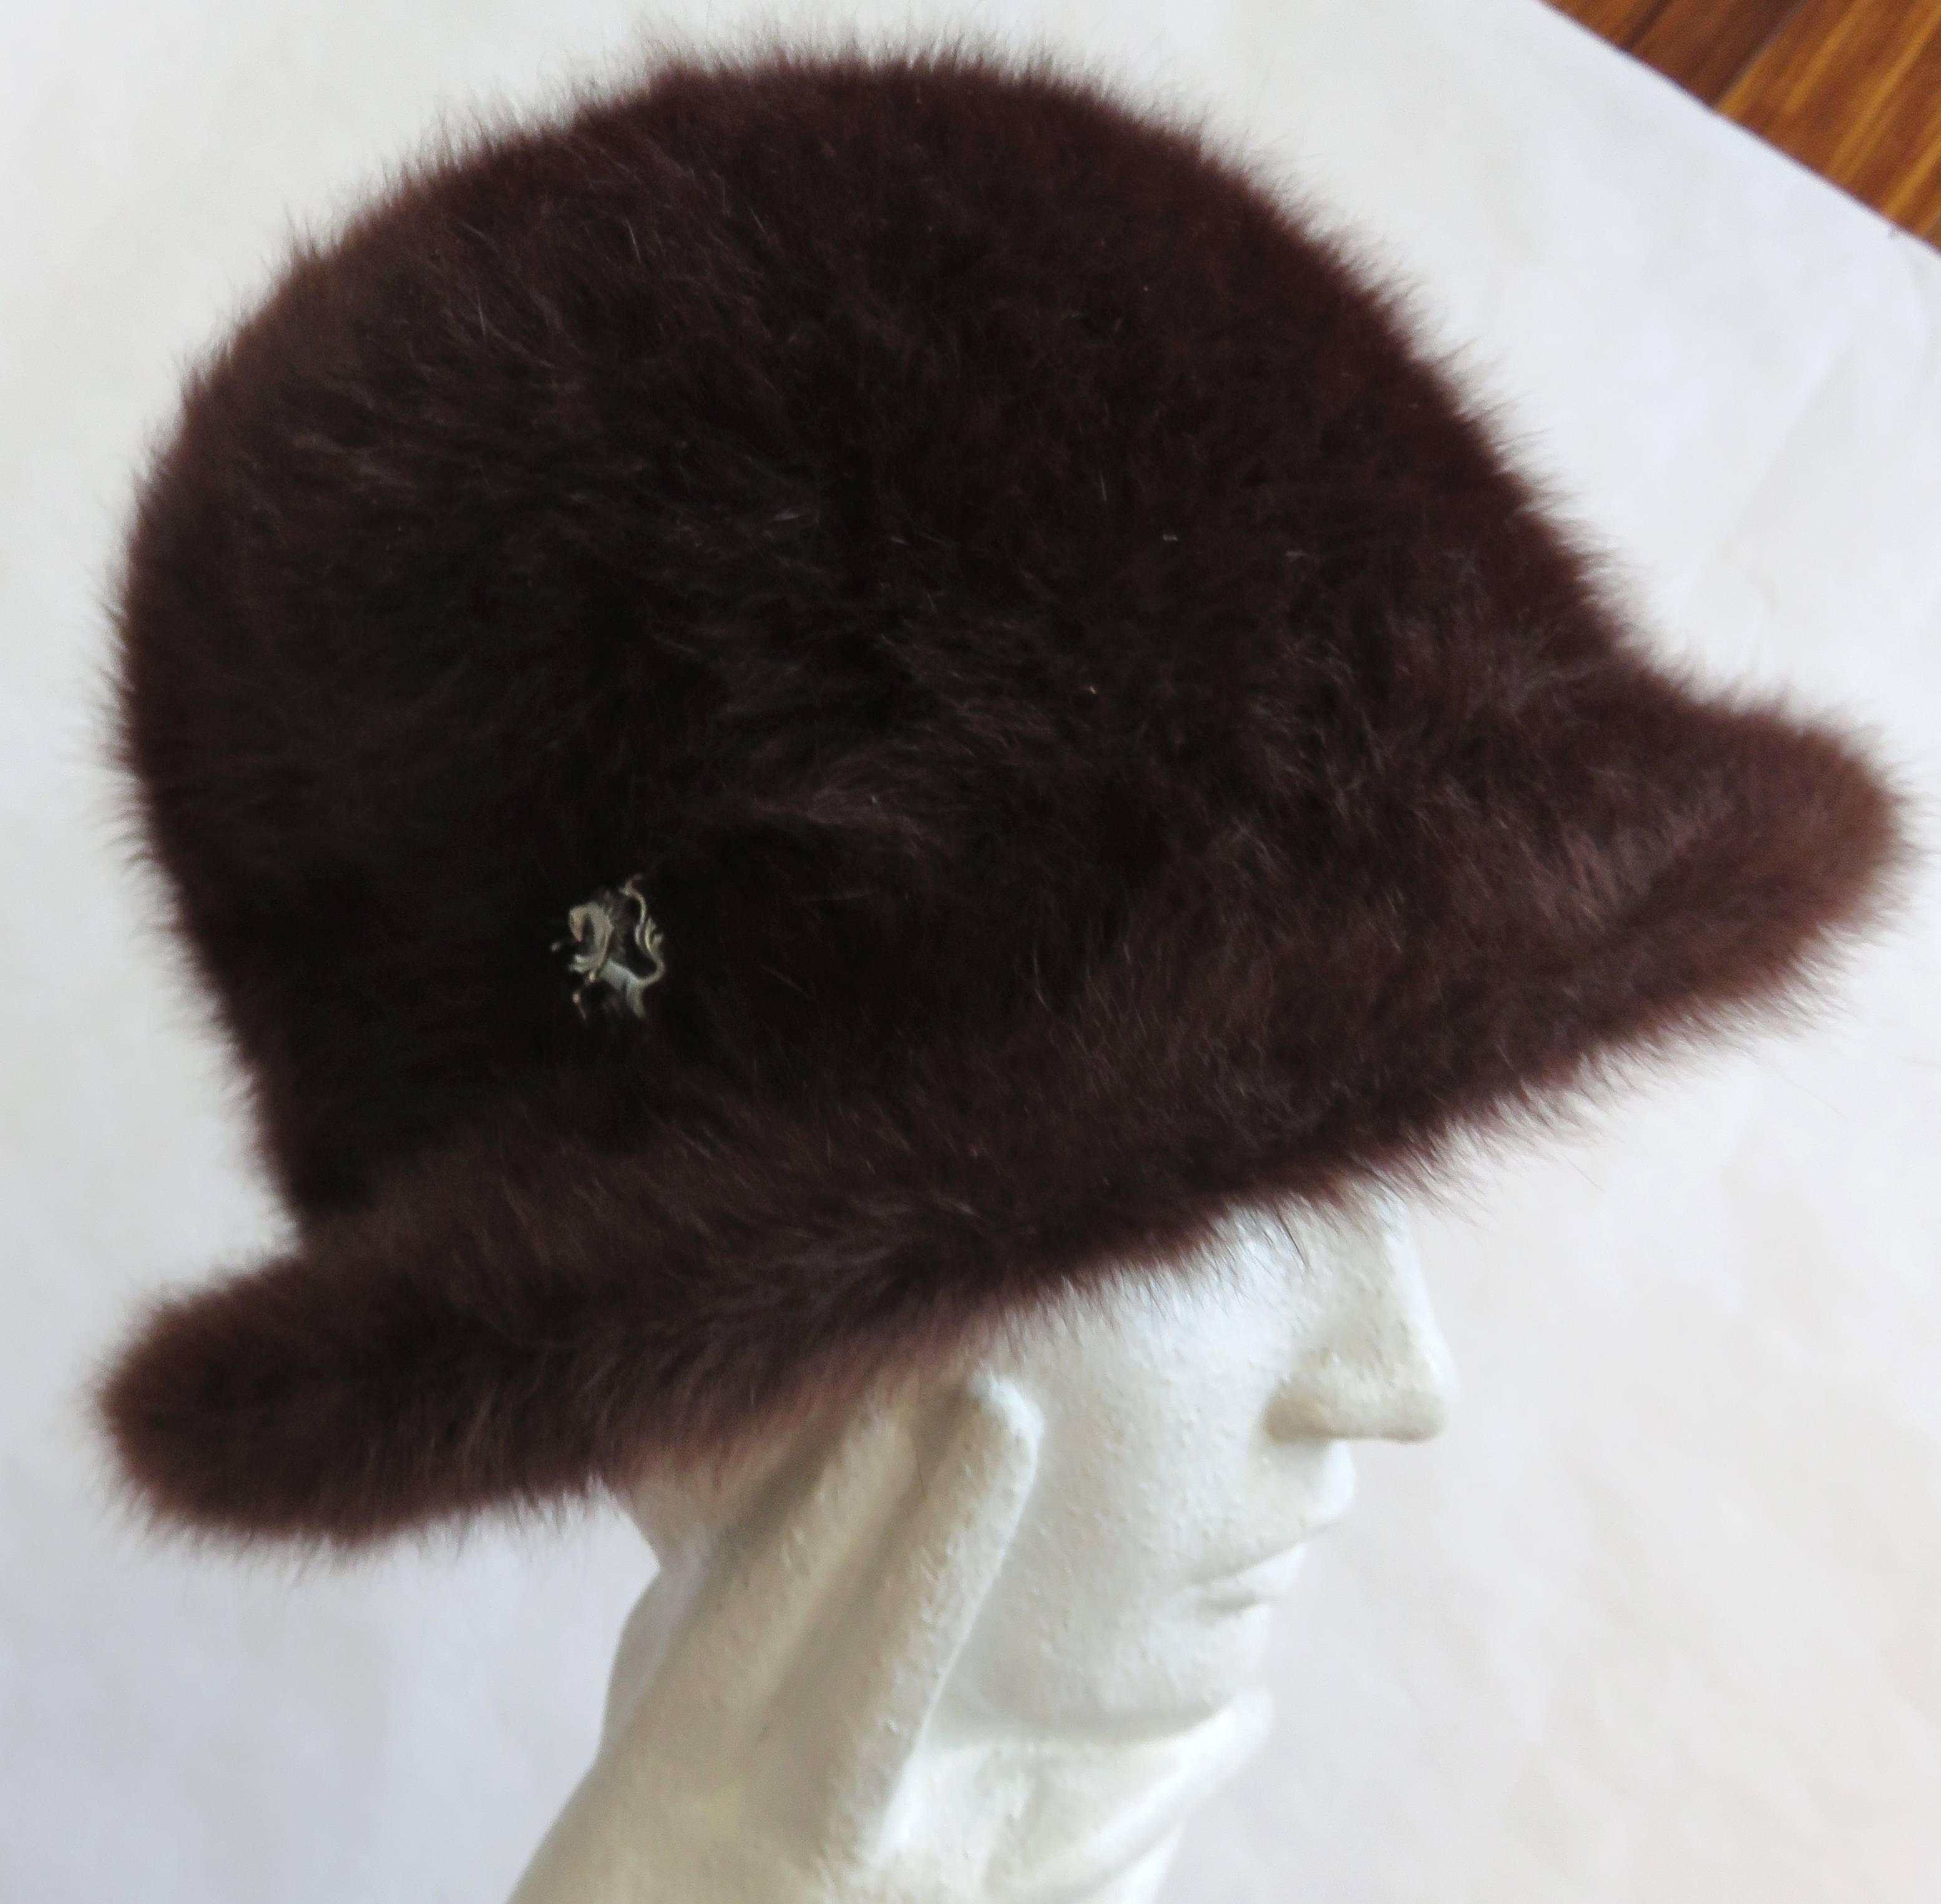 Women's PHILIP TREACY Mohair bowler hat  - worn once